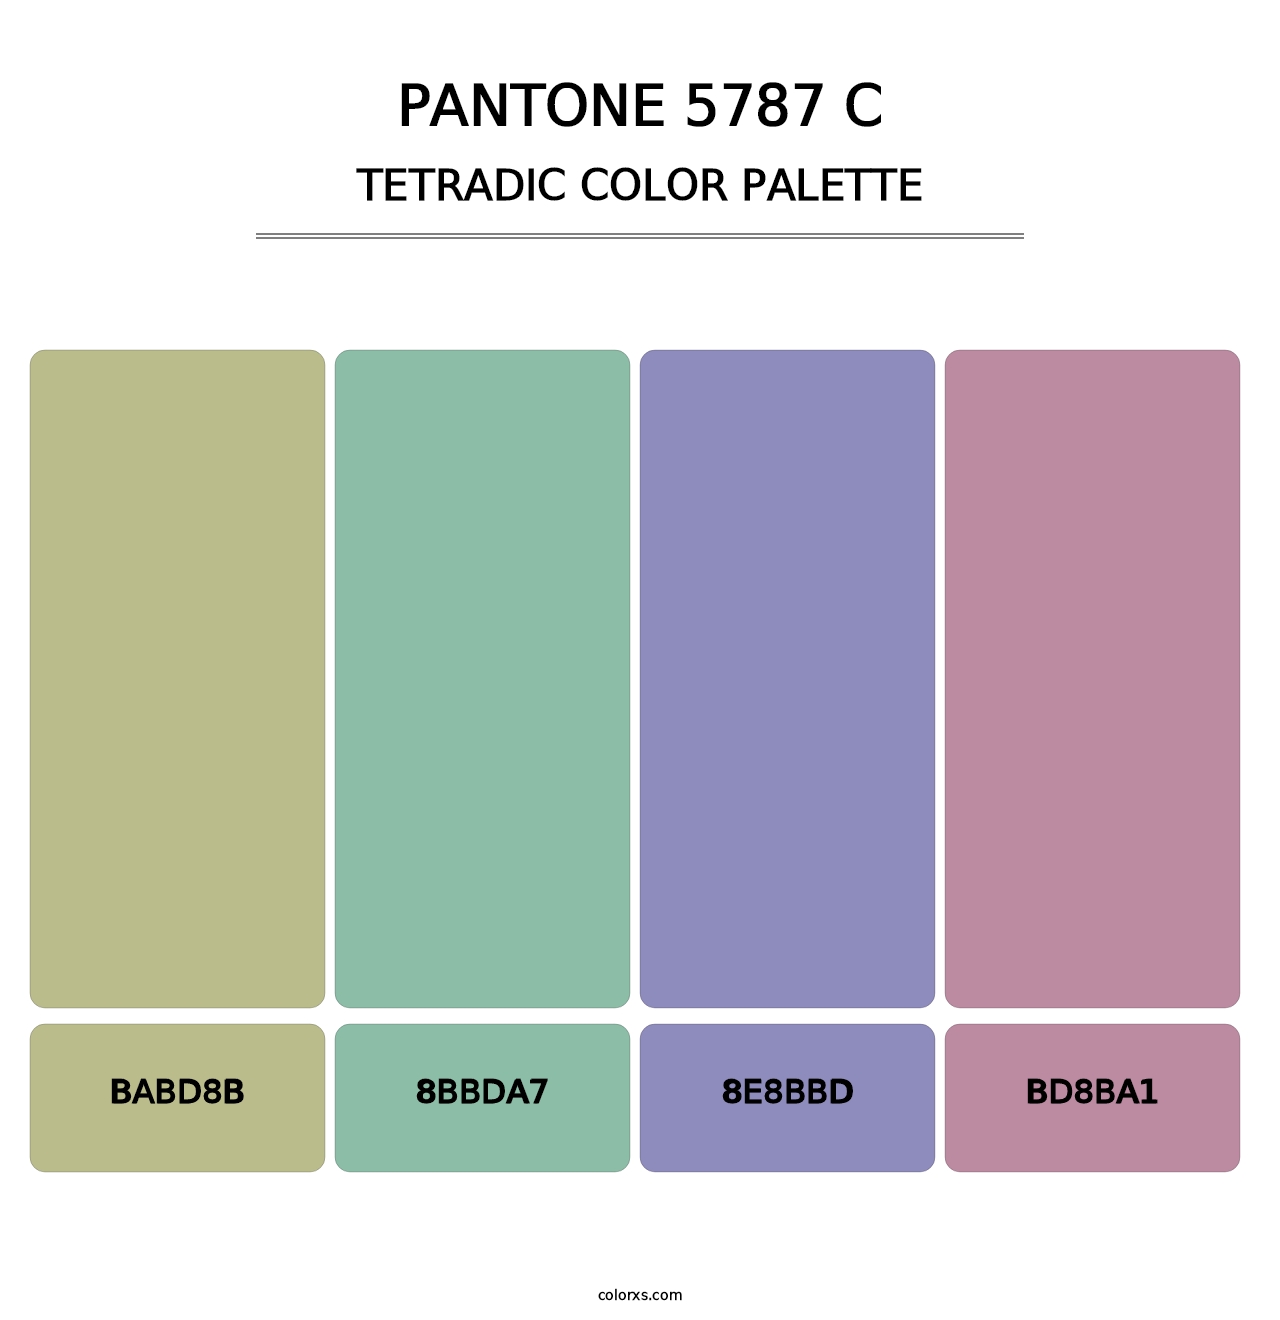 PANTONE 5787 C - Tetradic Color Palette